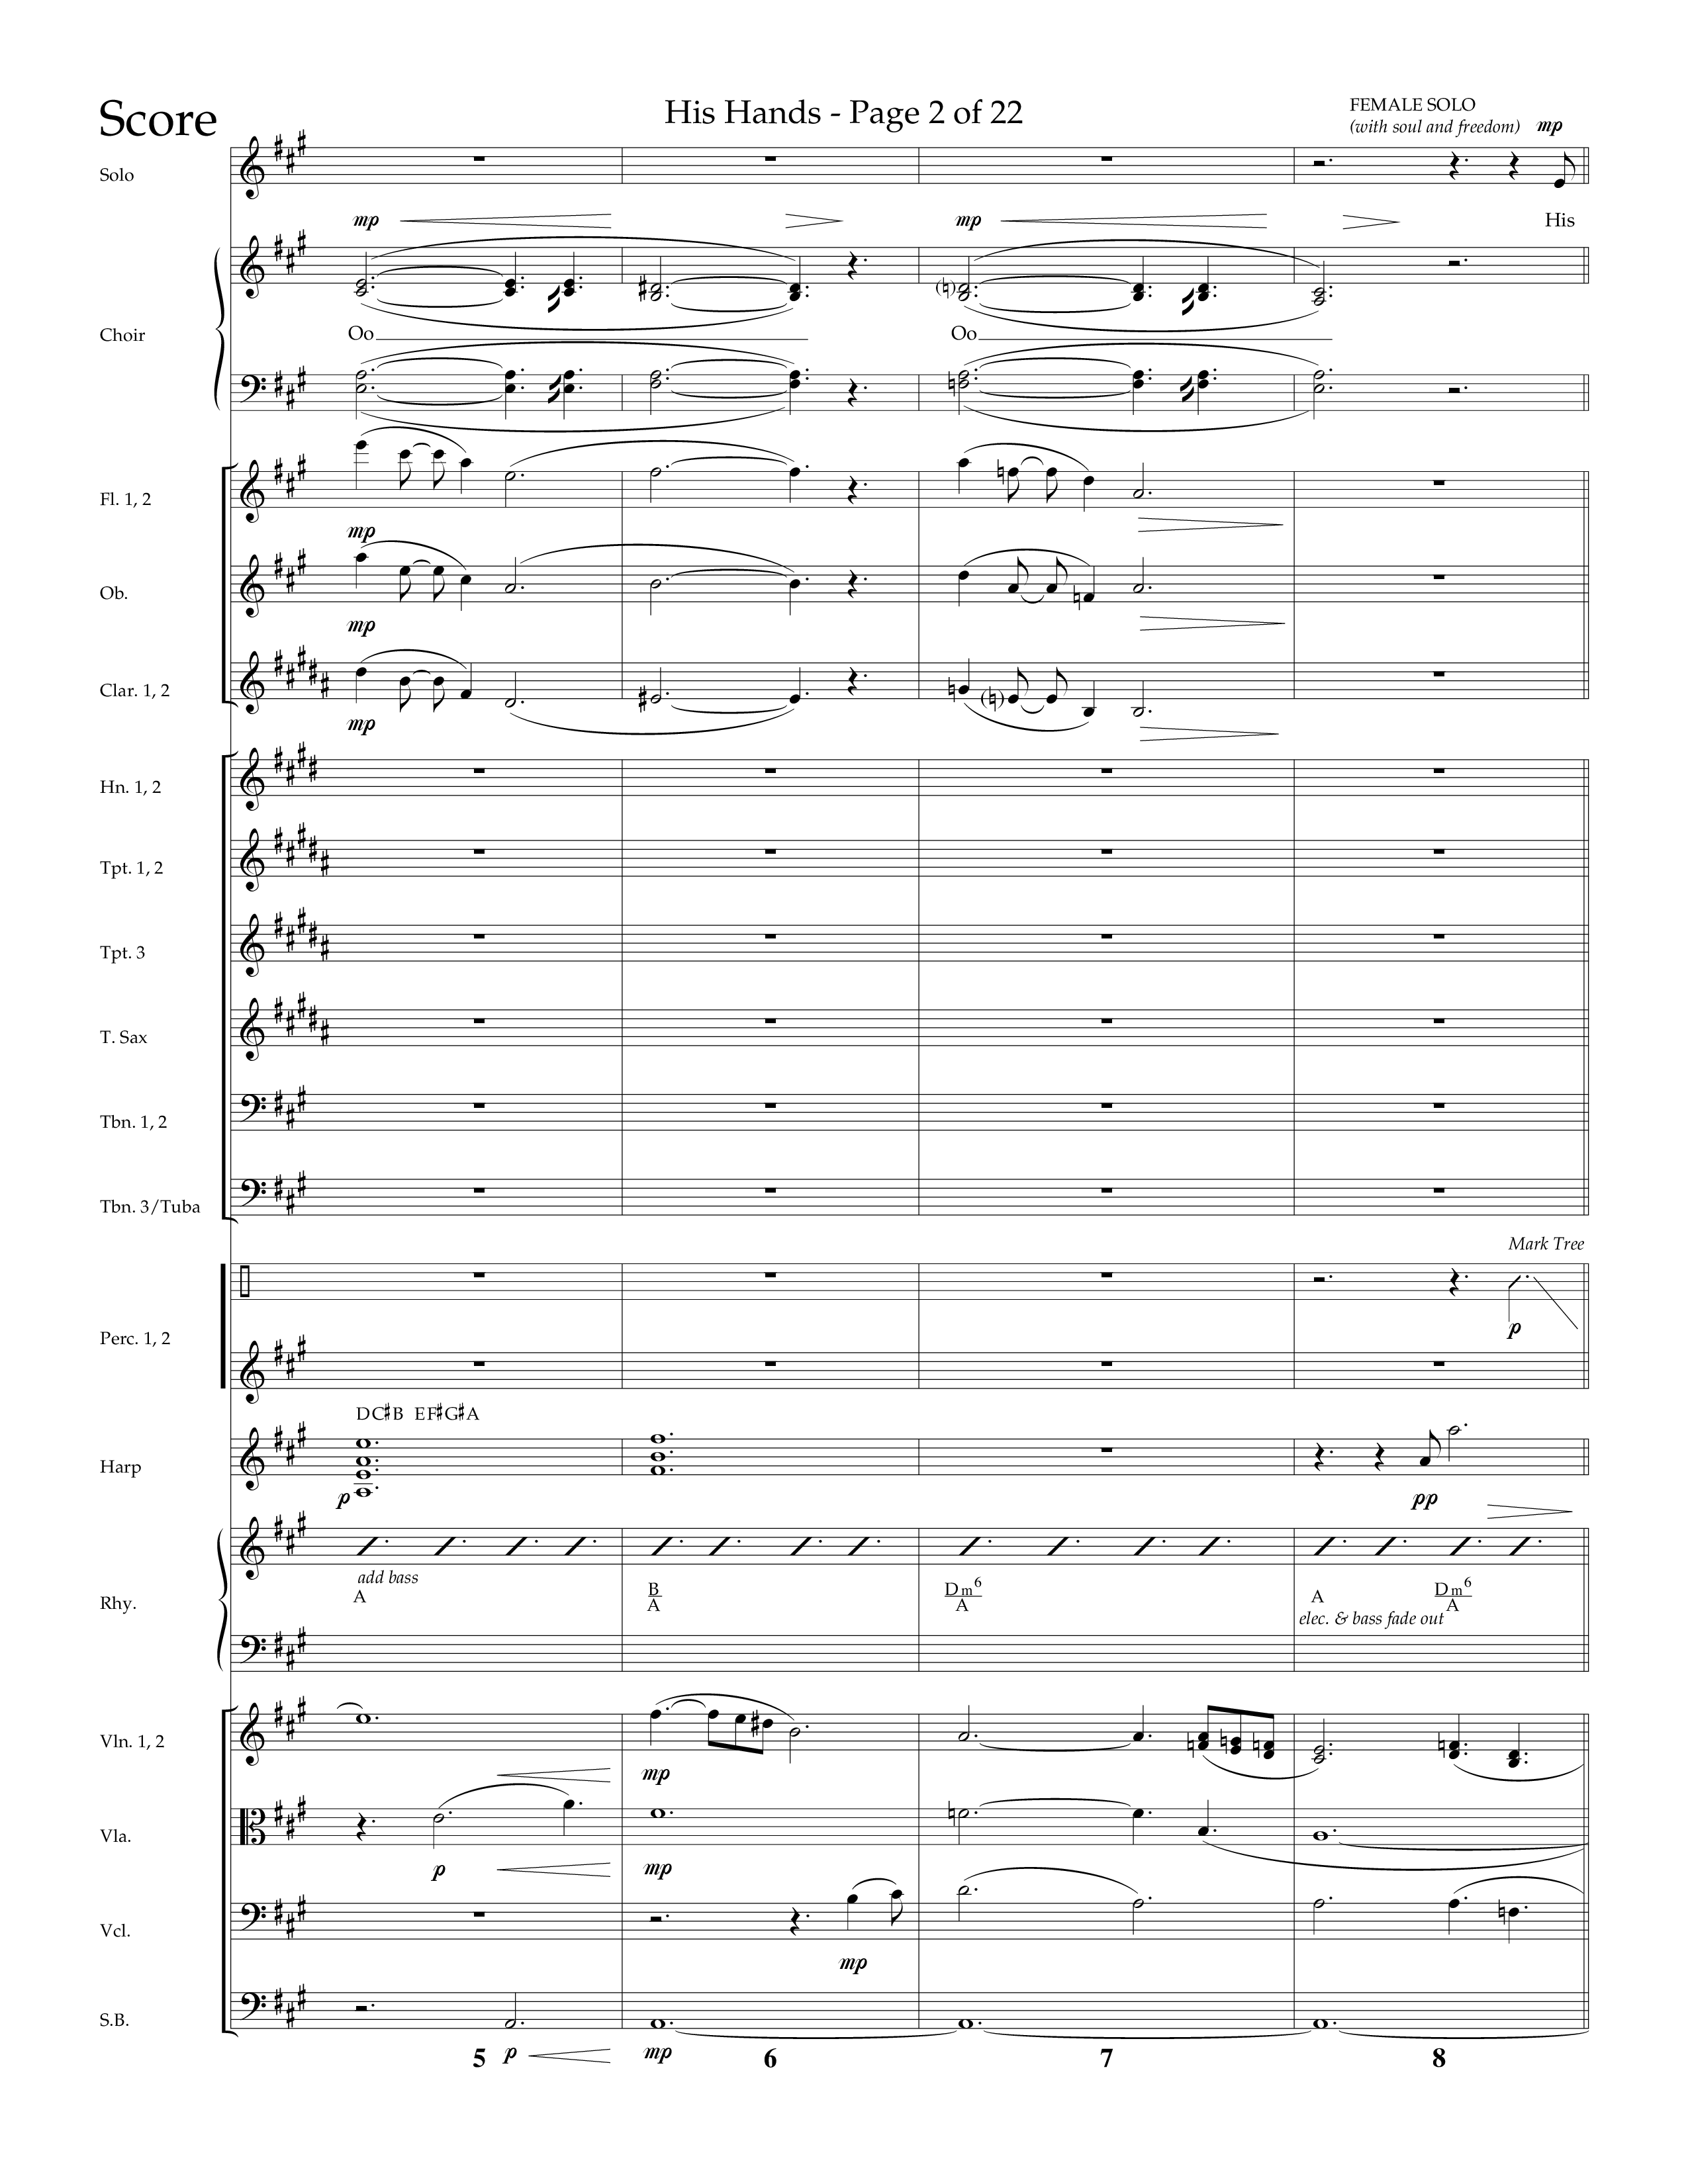 His Hands (Choral Anthem SATB) Conductor's Score (Lifeway Choral / Arr. Cliff Duren)